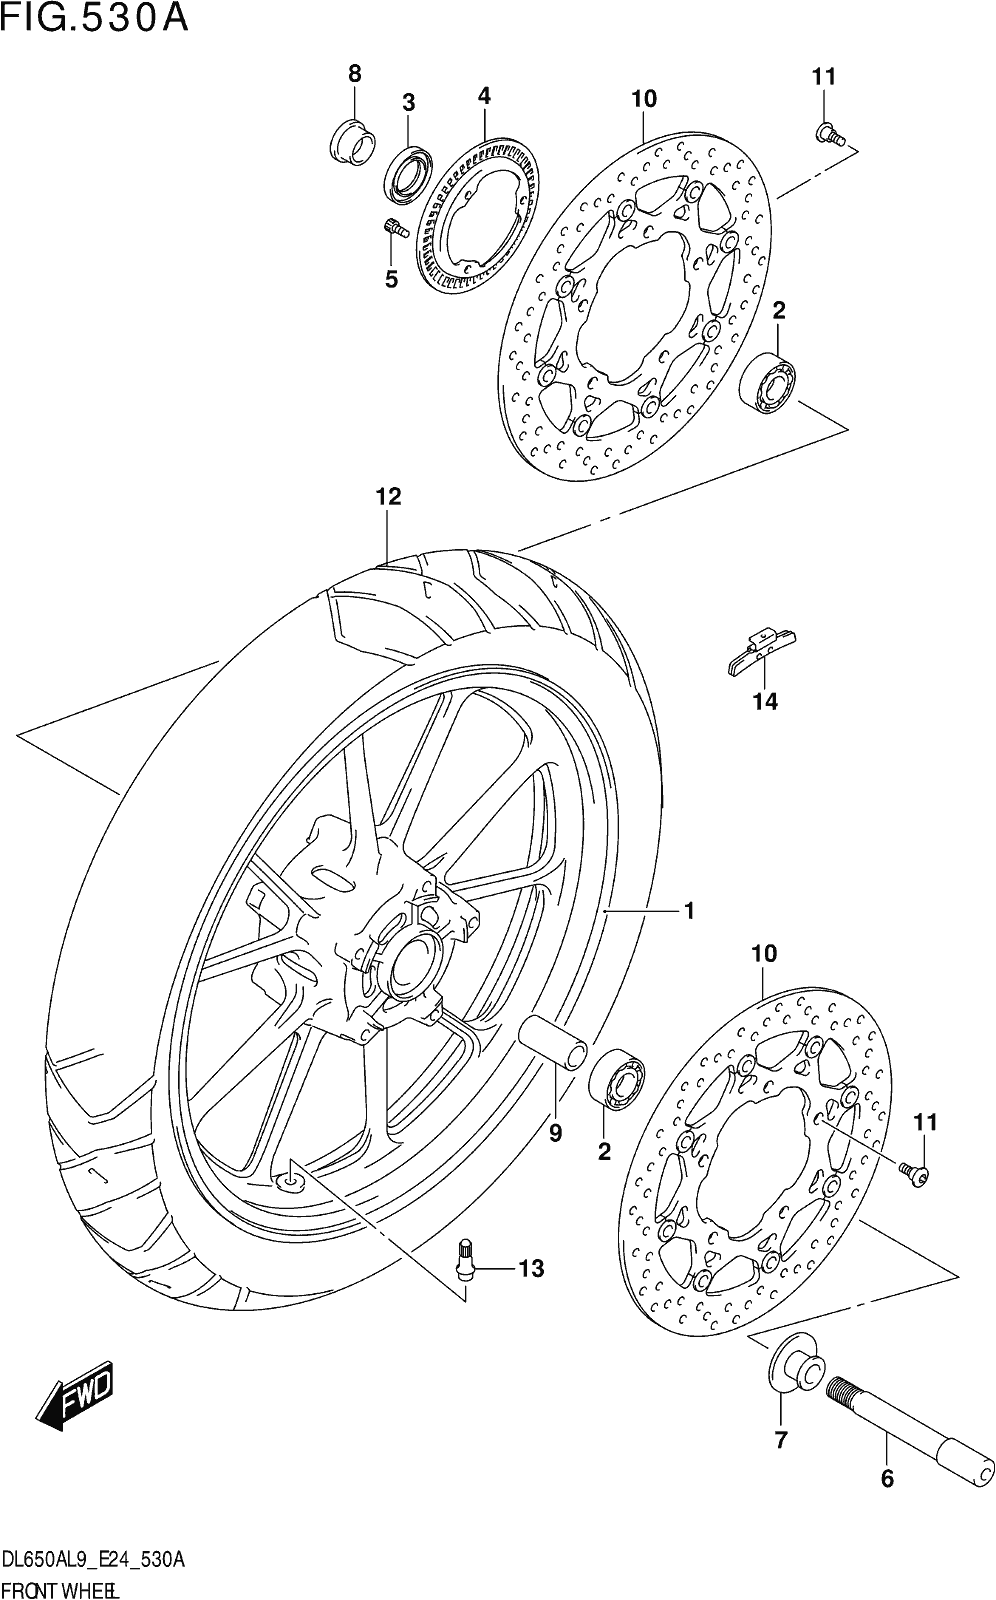 Fig.530a Front Wheel (dl650a,dl650aue)